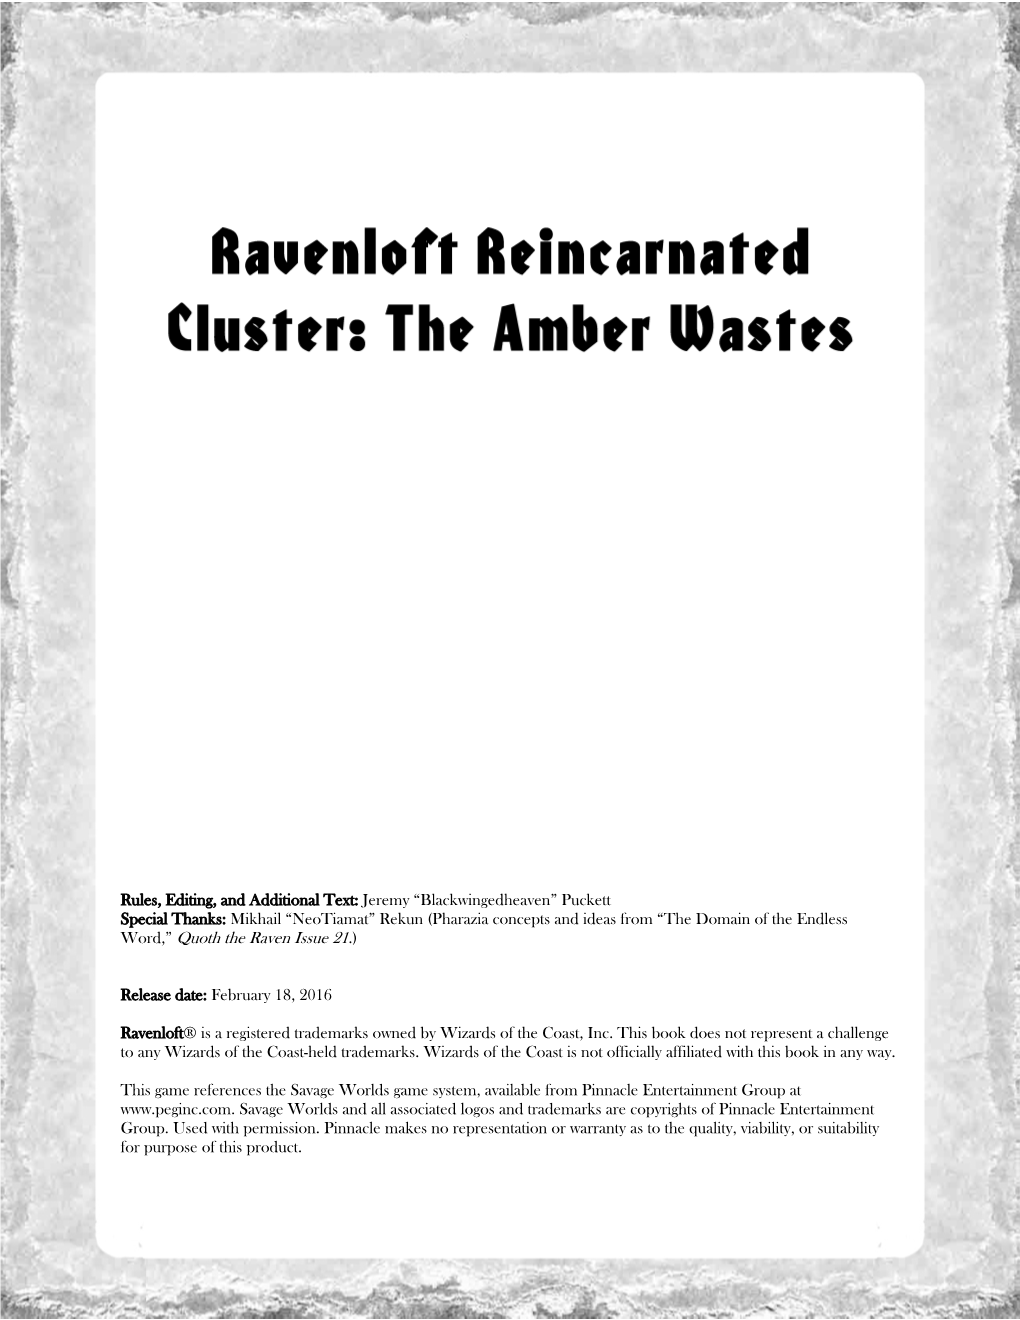 Ravenloft Reincarnated: the Amber Wastes Cluster